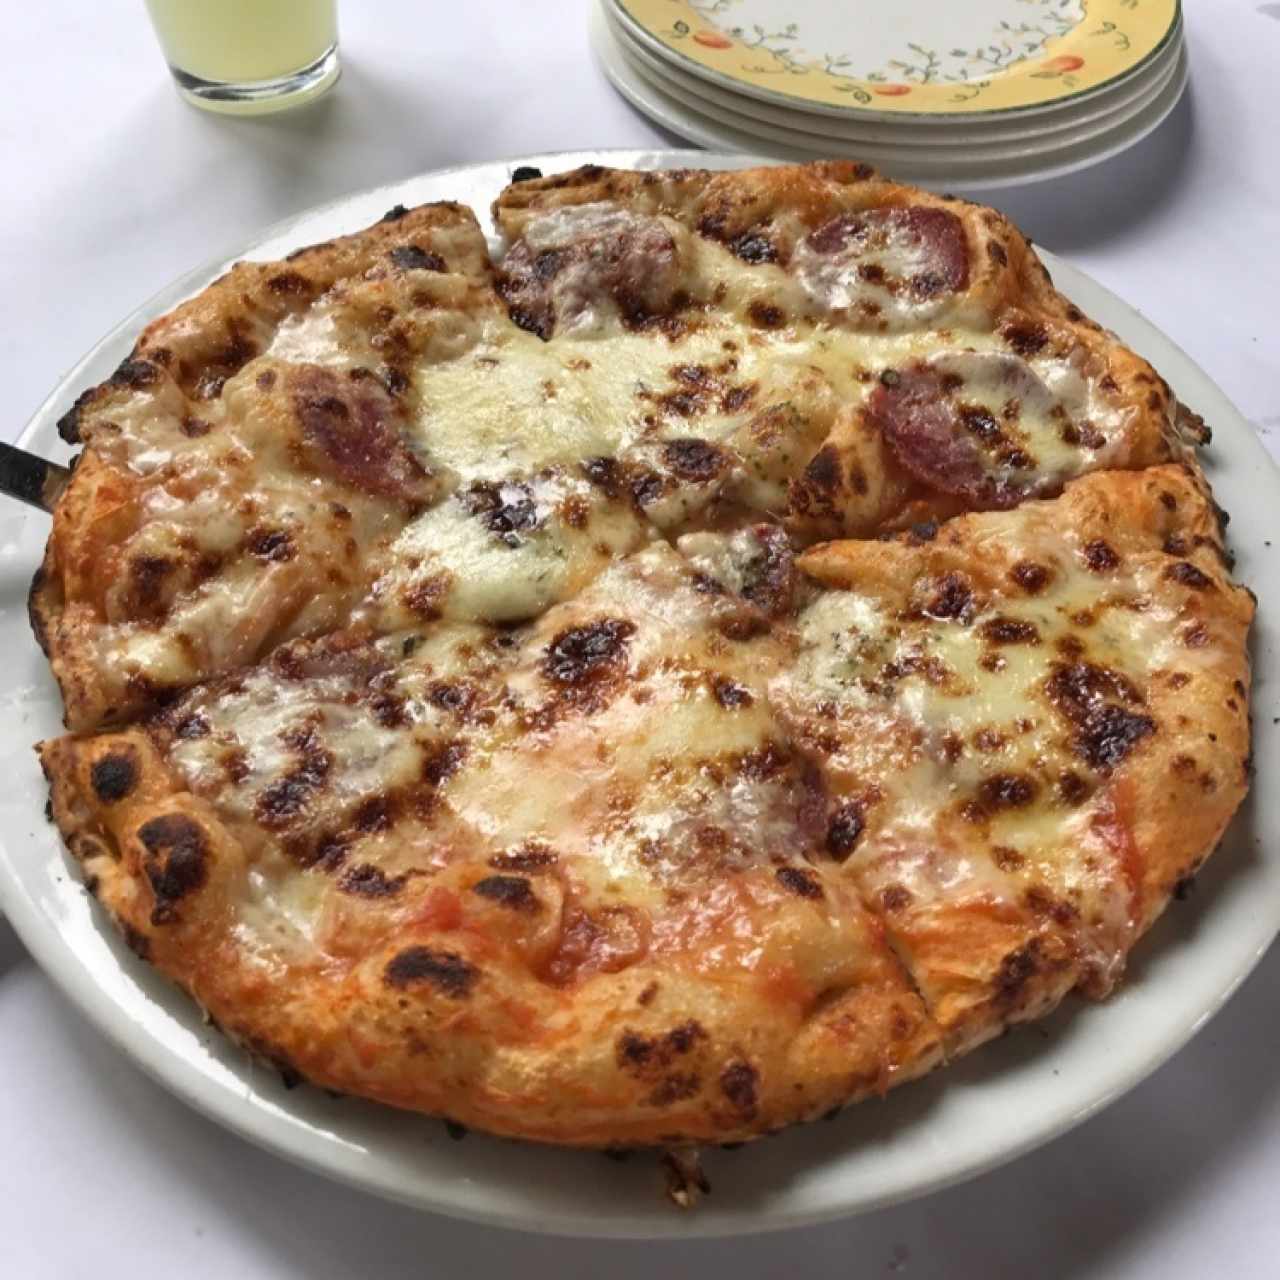 Pizza Salami Italiano